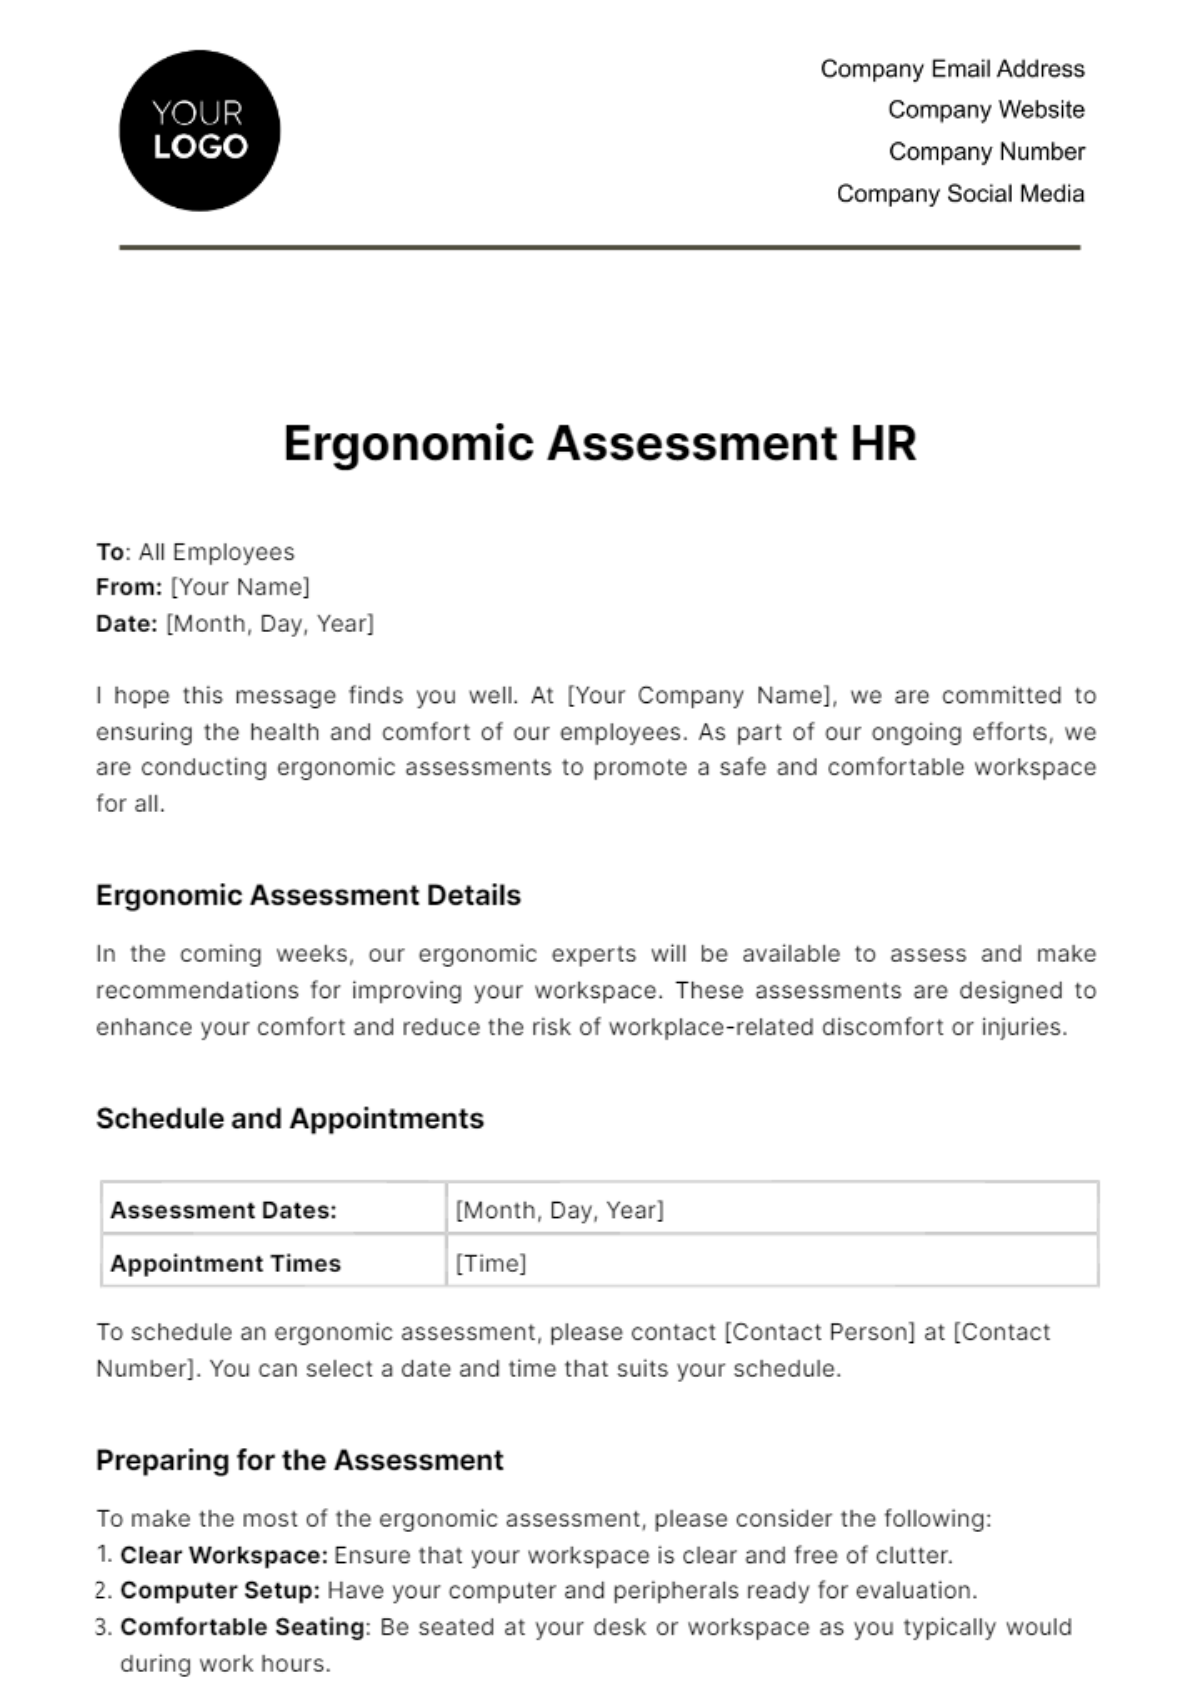 Free Ergonomic Assessment HR Template